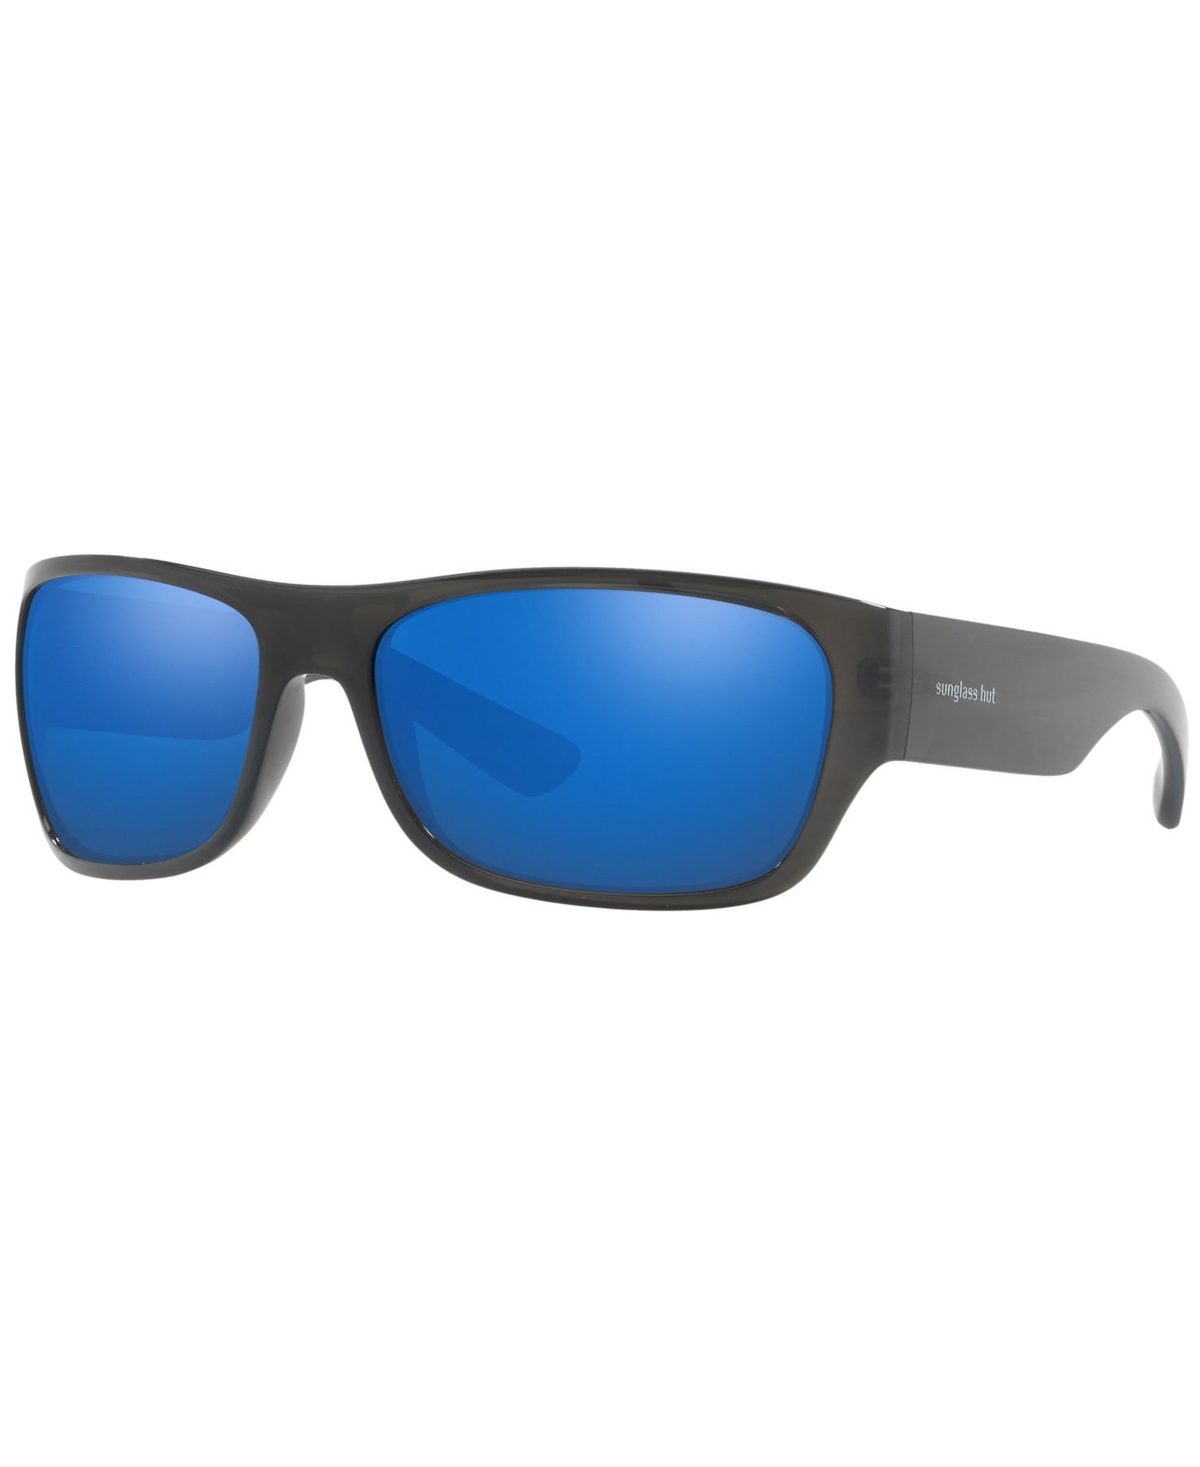 Sunglasses, HU2013 63 - DARK GREY/ BLUE MIRROR BLUE